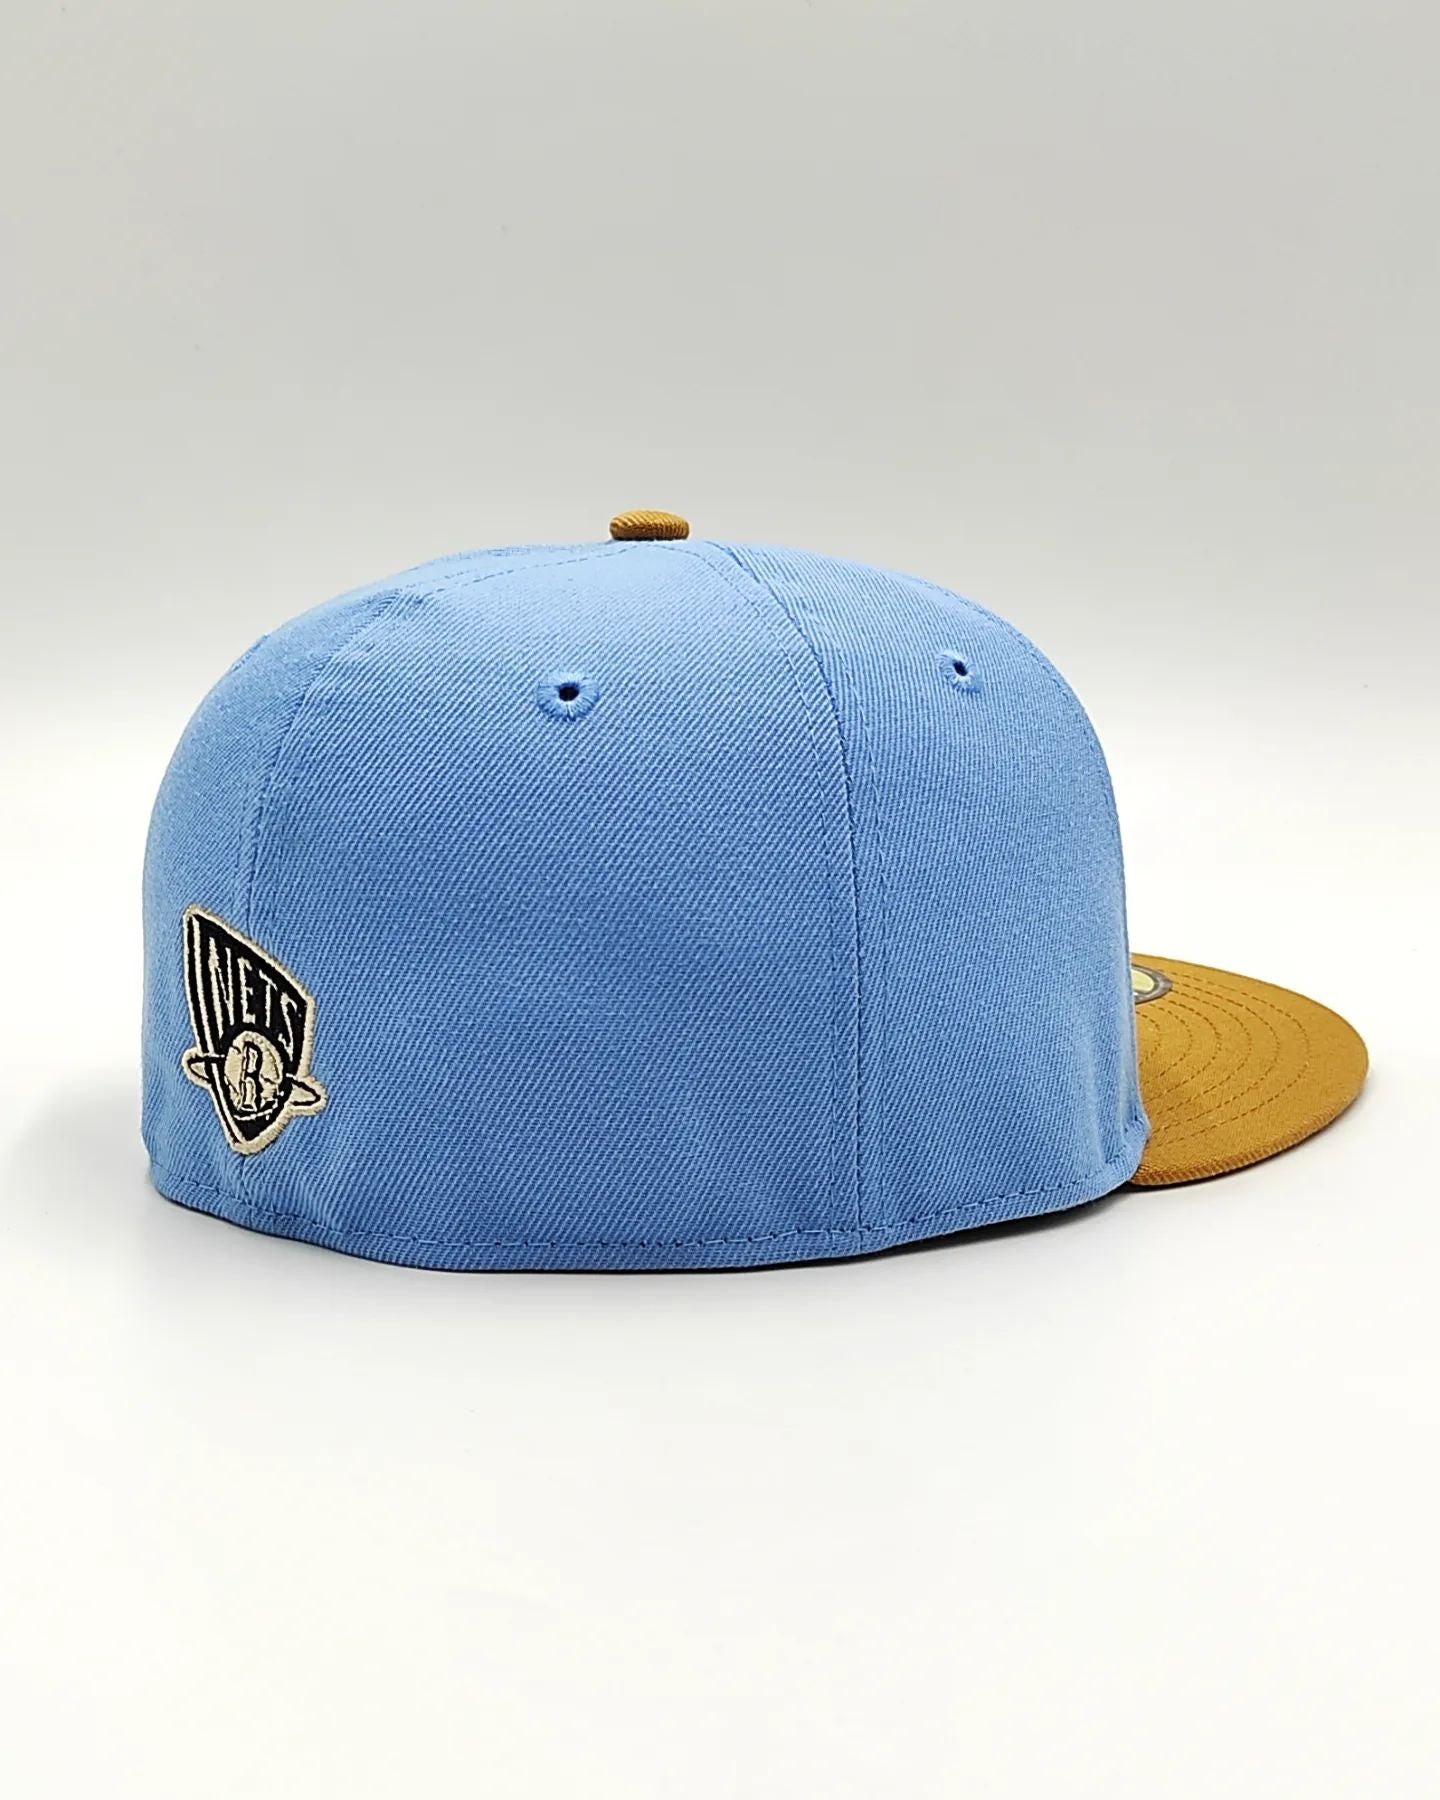 New Era 59FIFTY Parks Smoldering Island New York Knicks Hat - Light Blue, Tan Brown / 7